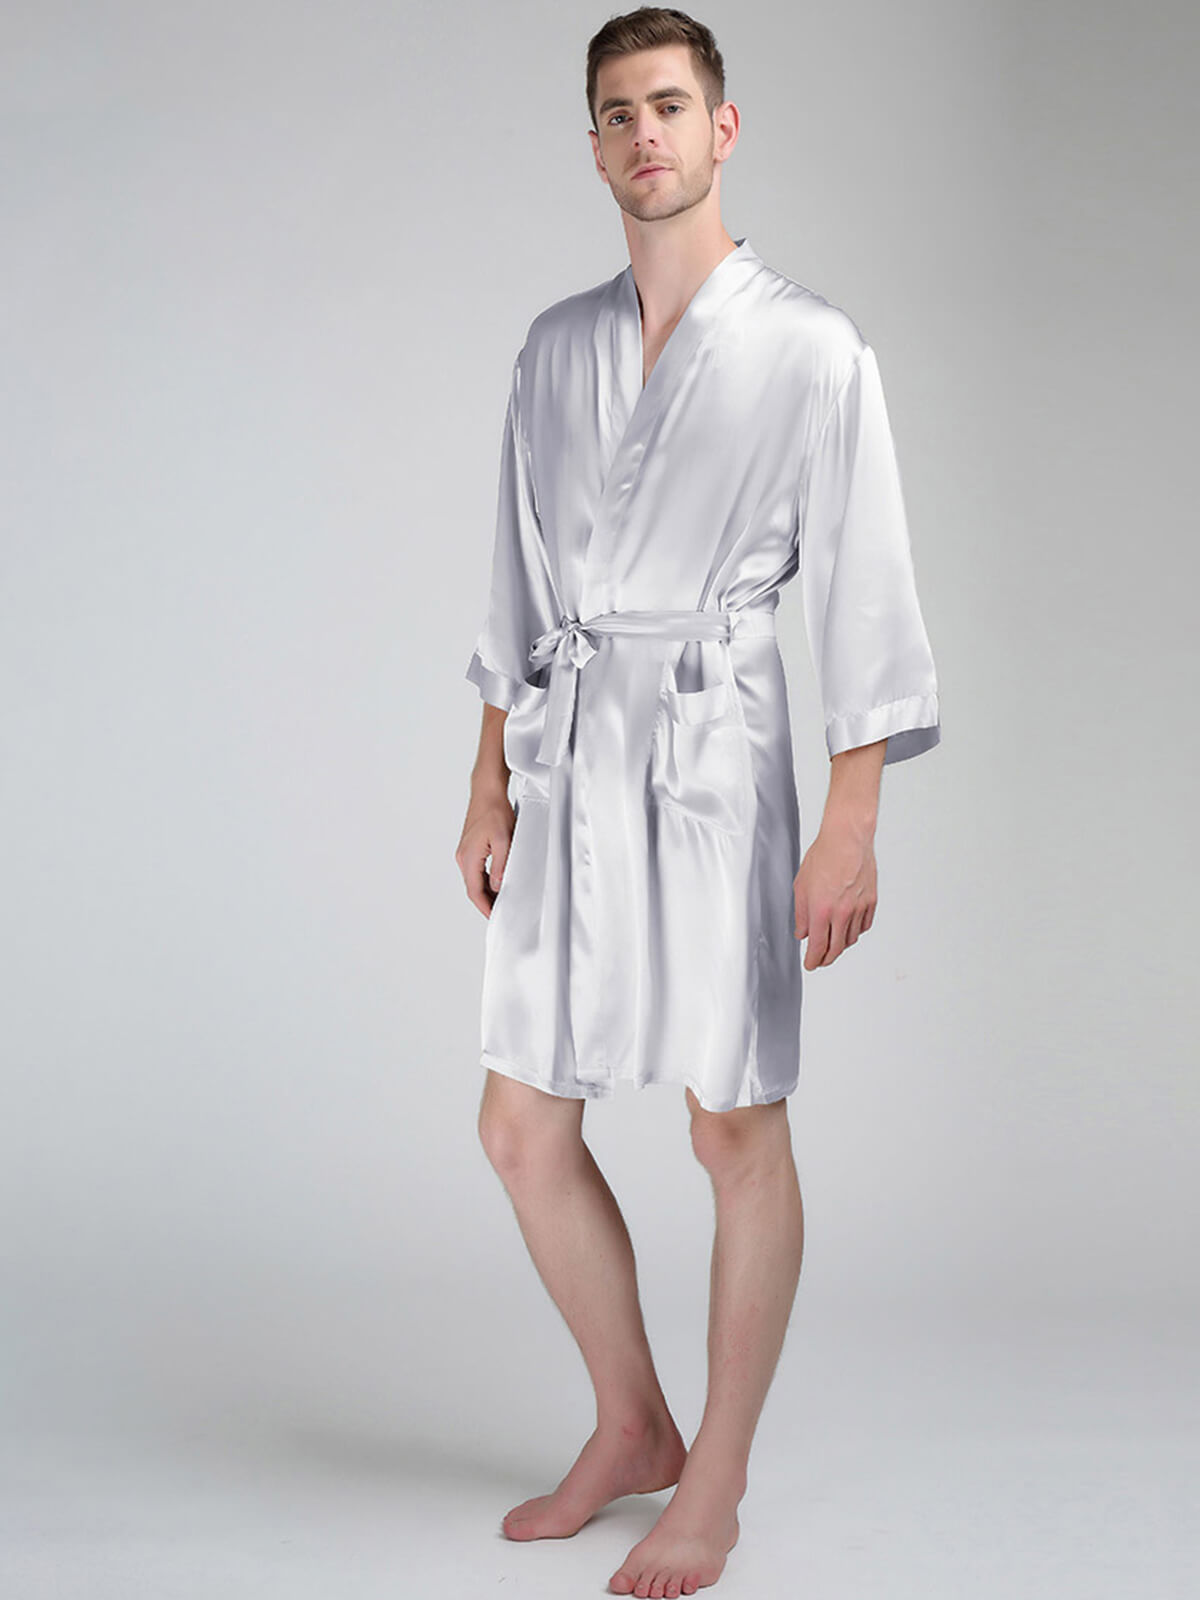 19 Momme Classic Short Silk Kimono Robe For Men [FS042] - $189.00 ...